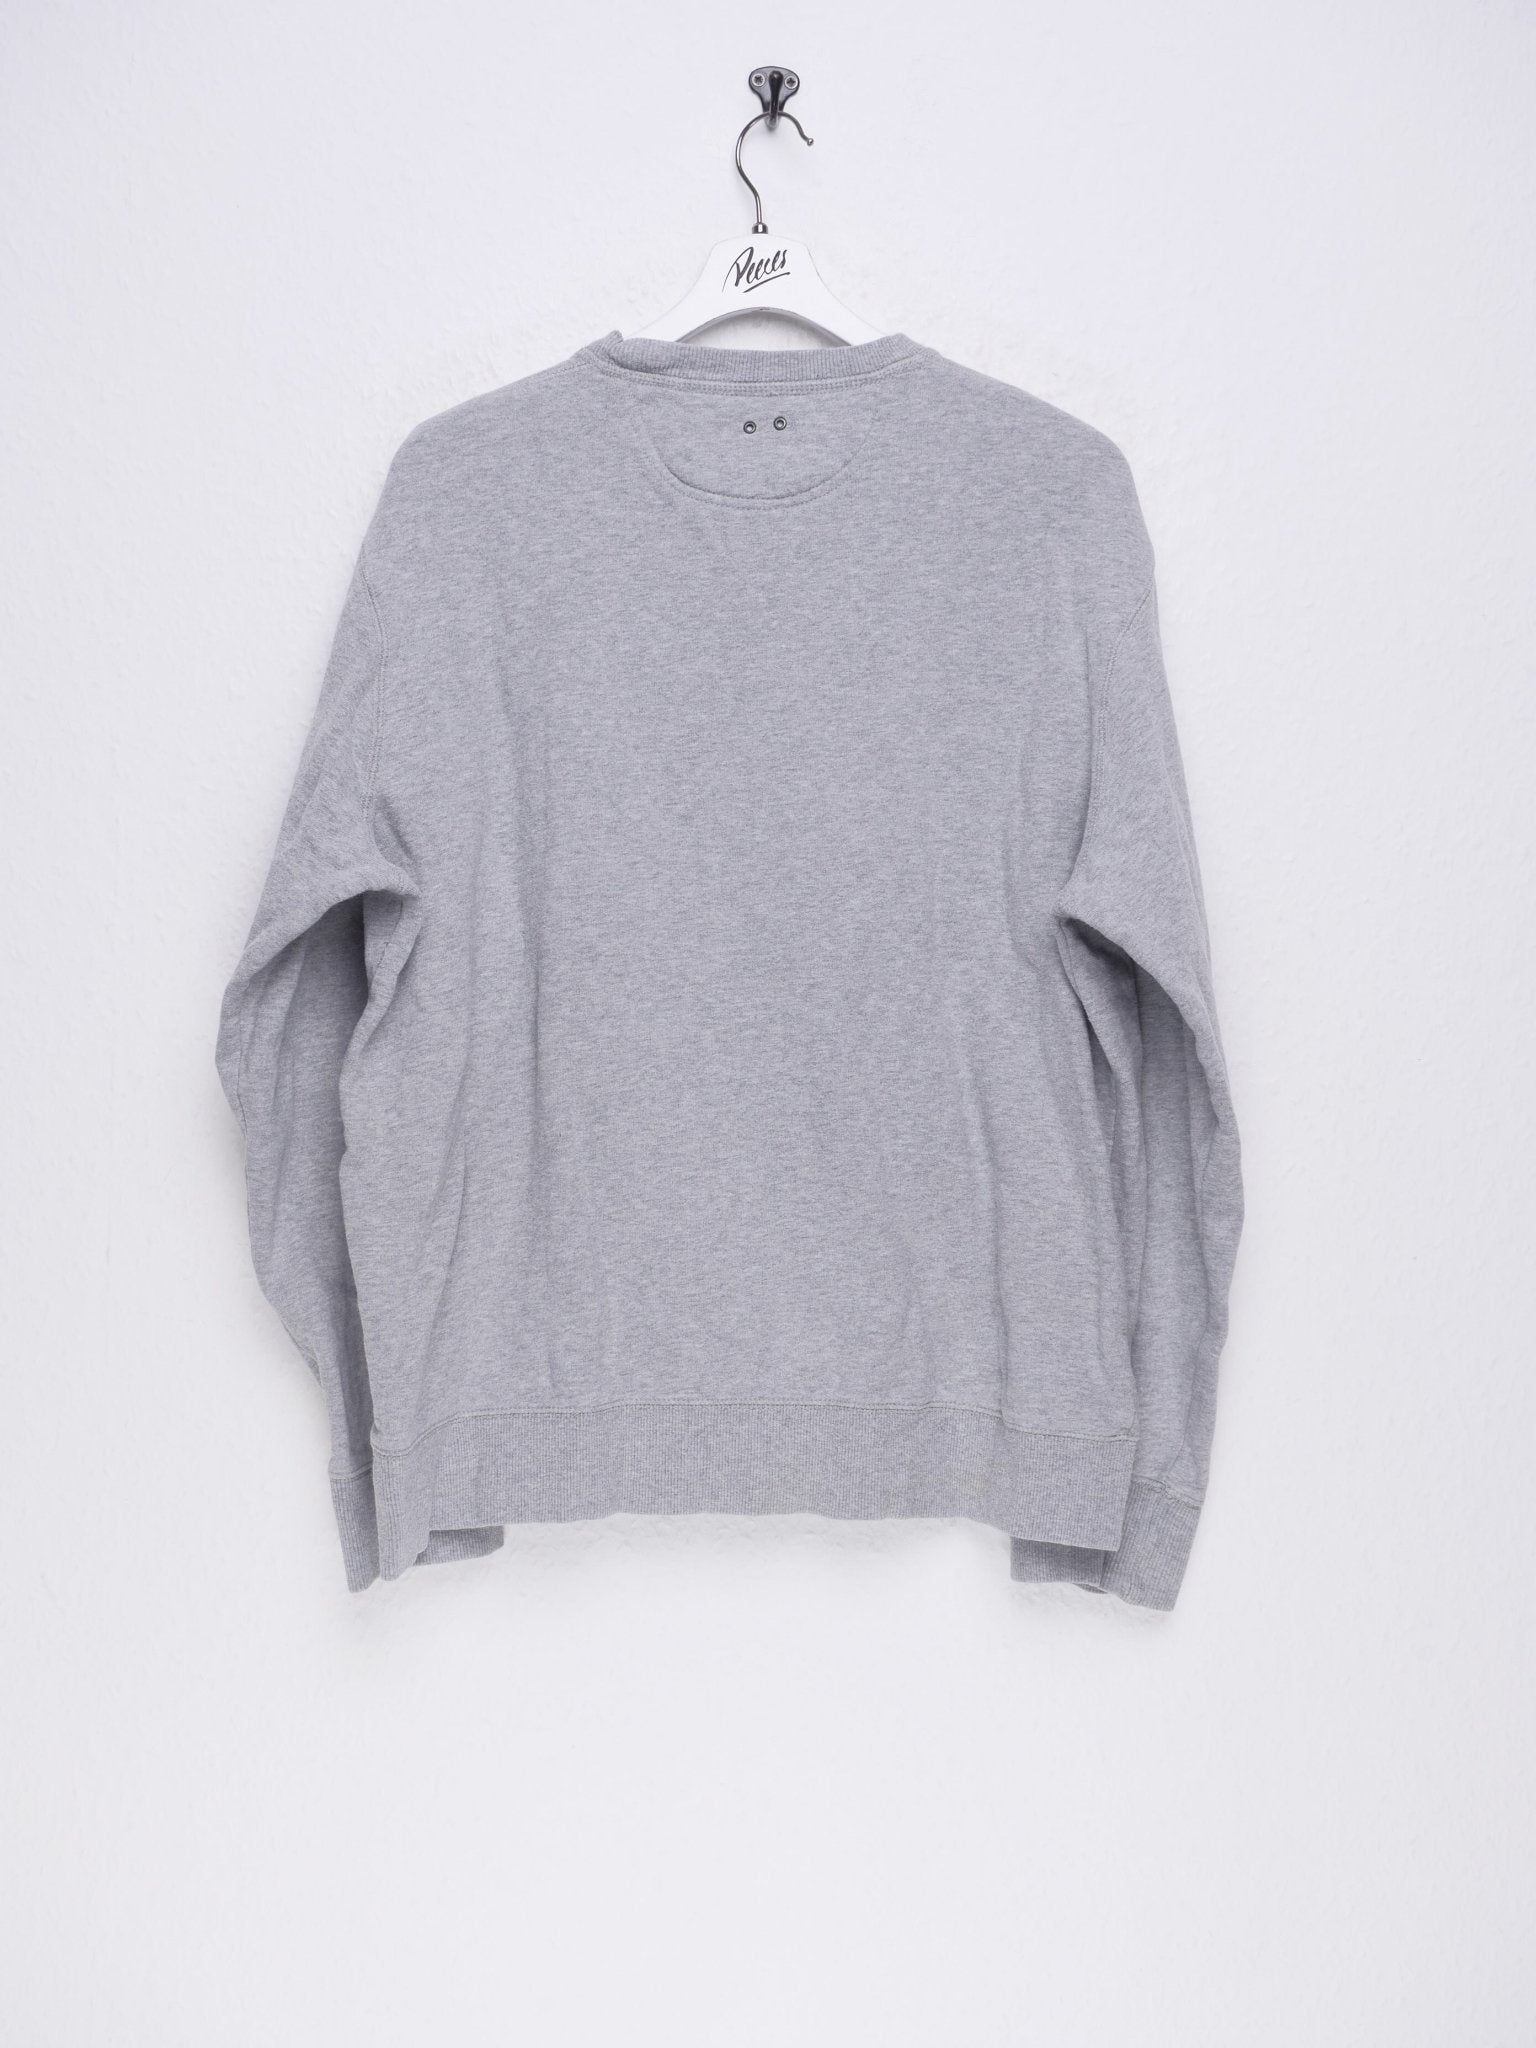 Converse printed Big Logo grey Sweater - Peeces